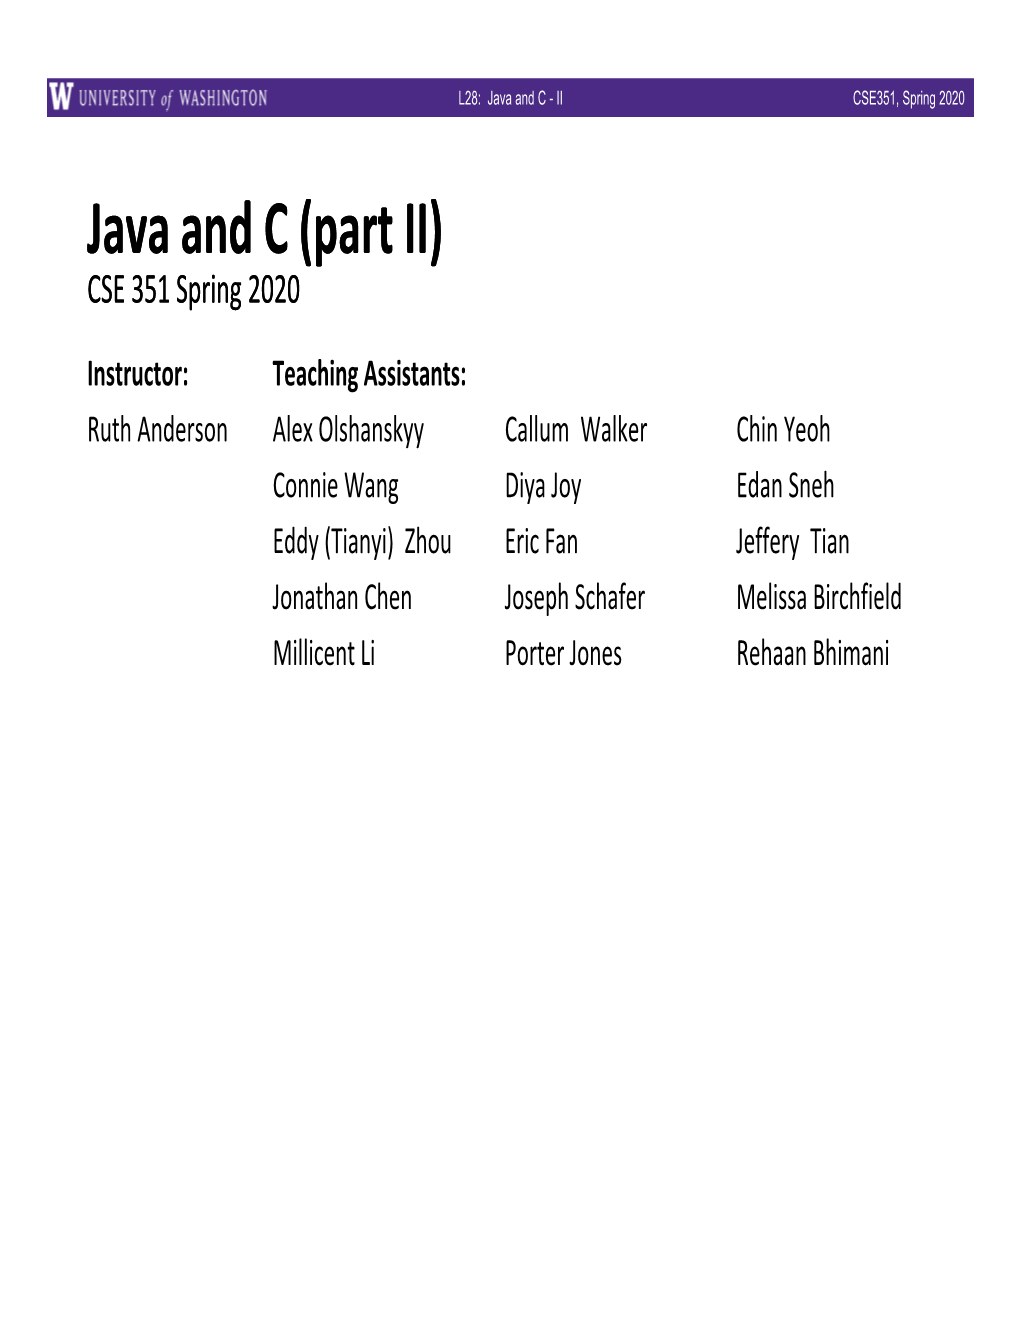 Java and C - II CSE351, Spring 2020